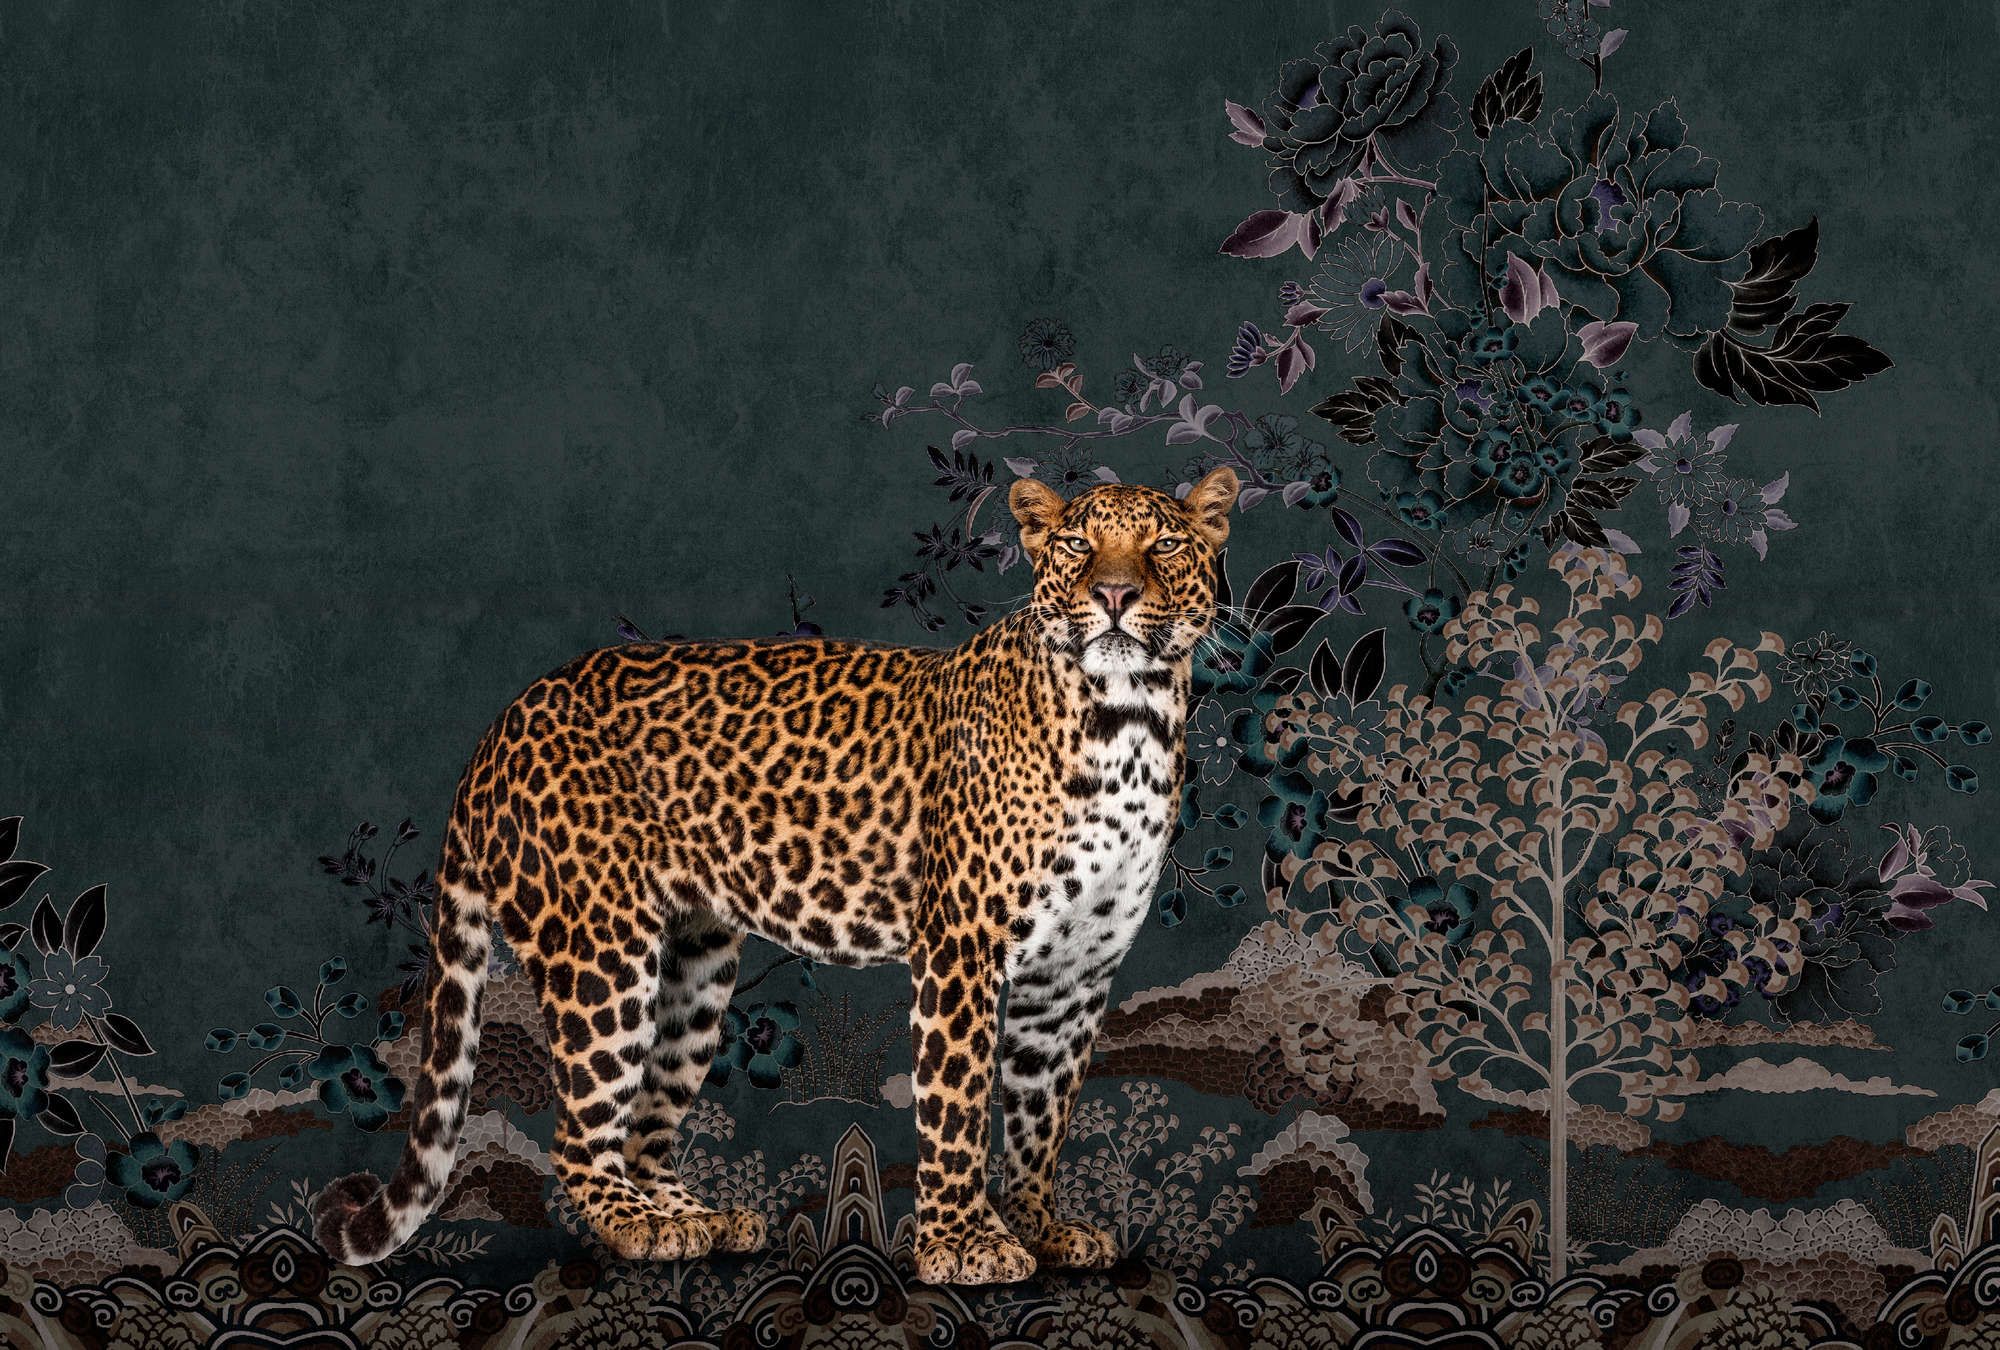             Digital behang »rani« - Abstract jungle-motief met luipaard - Gladde, licht parelmoerglanzende vliesstof
        